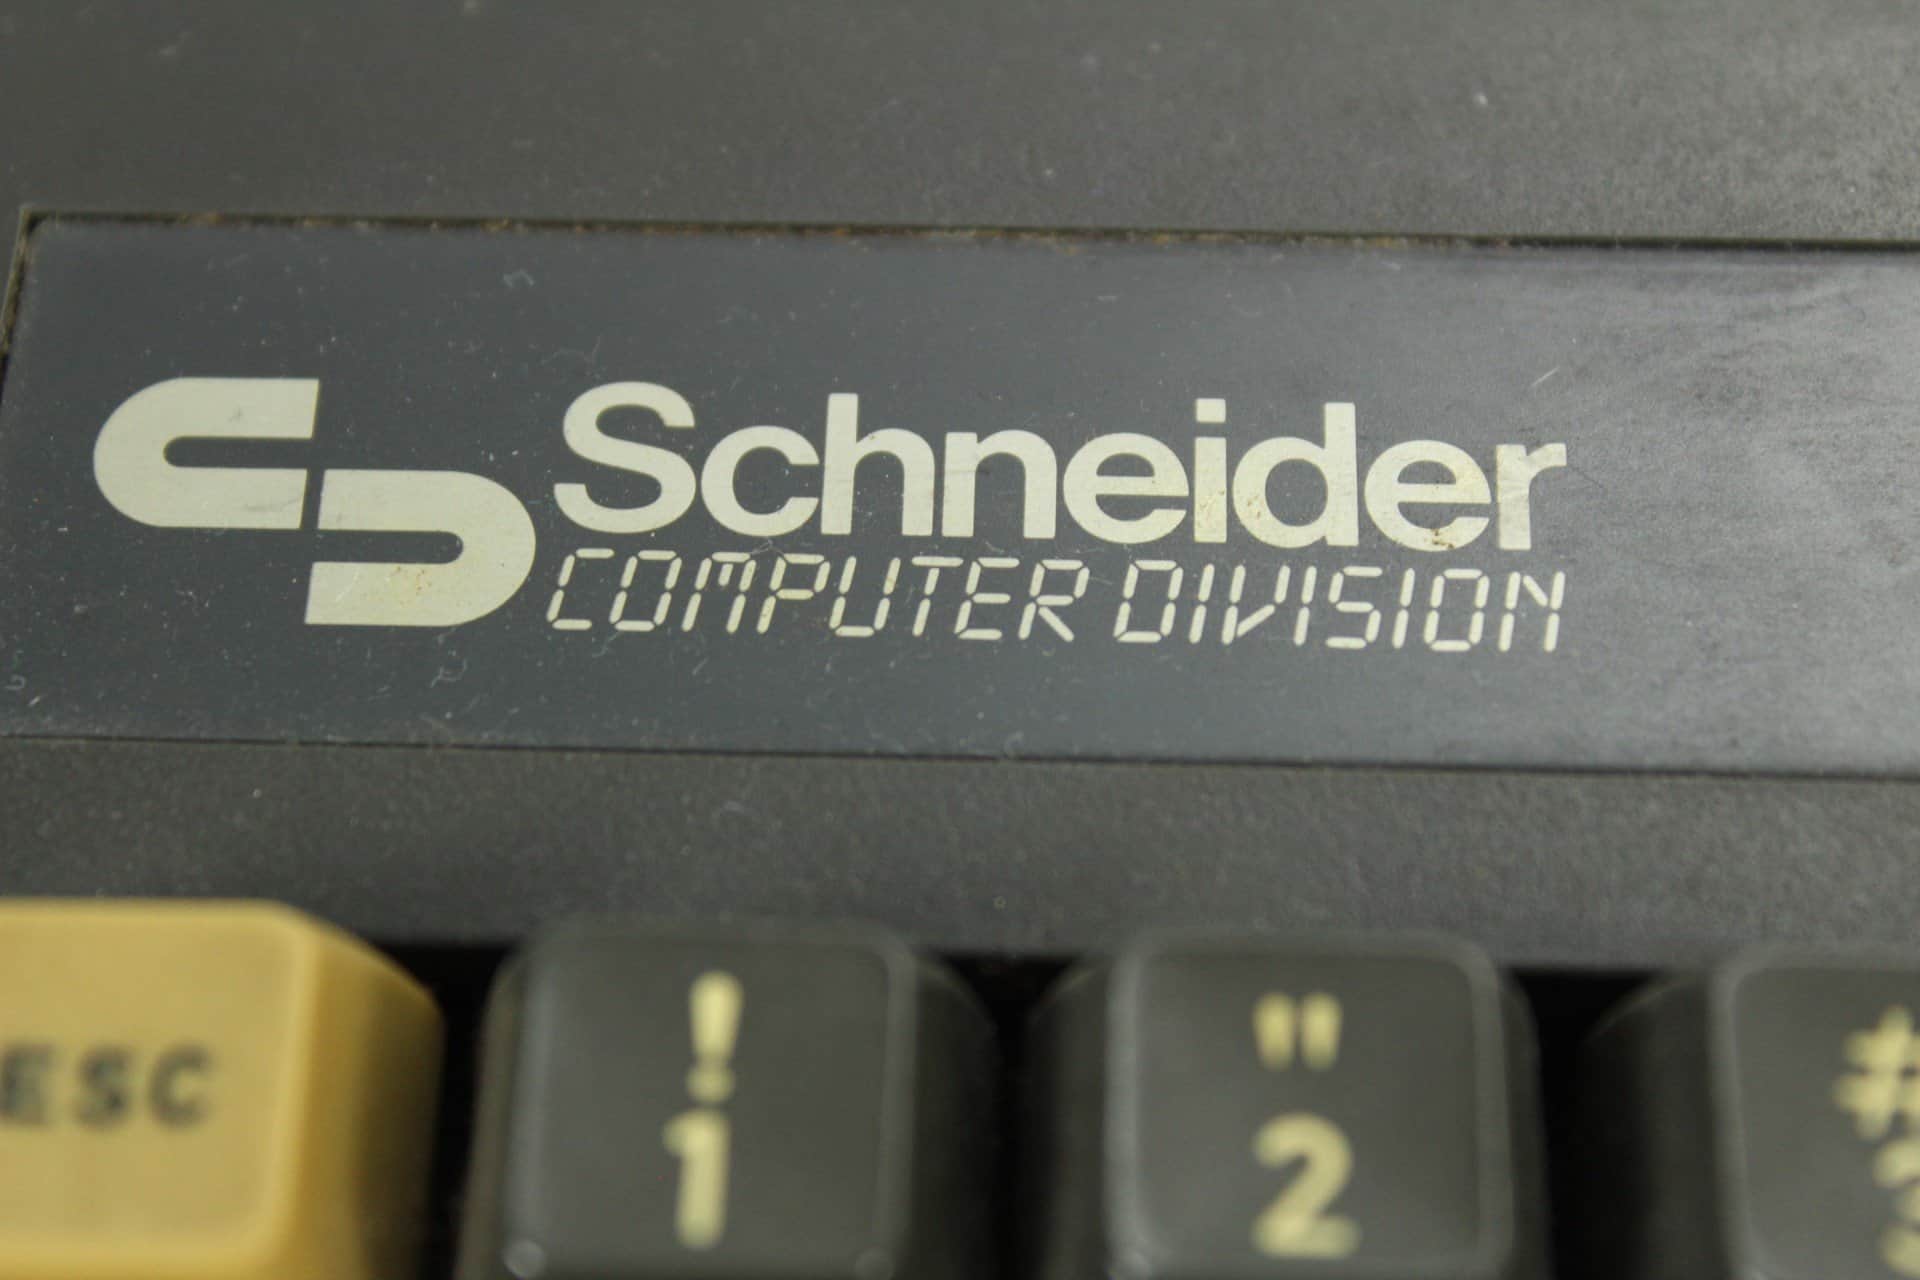 Vyrobce-Schneider-CPC-464